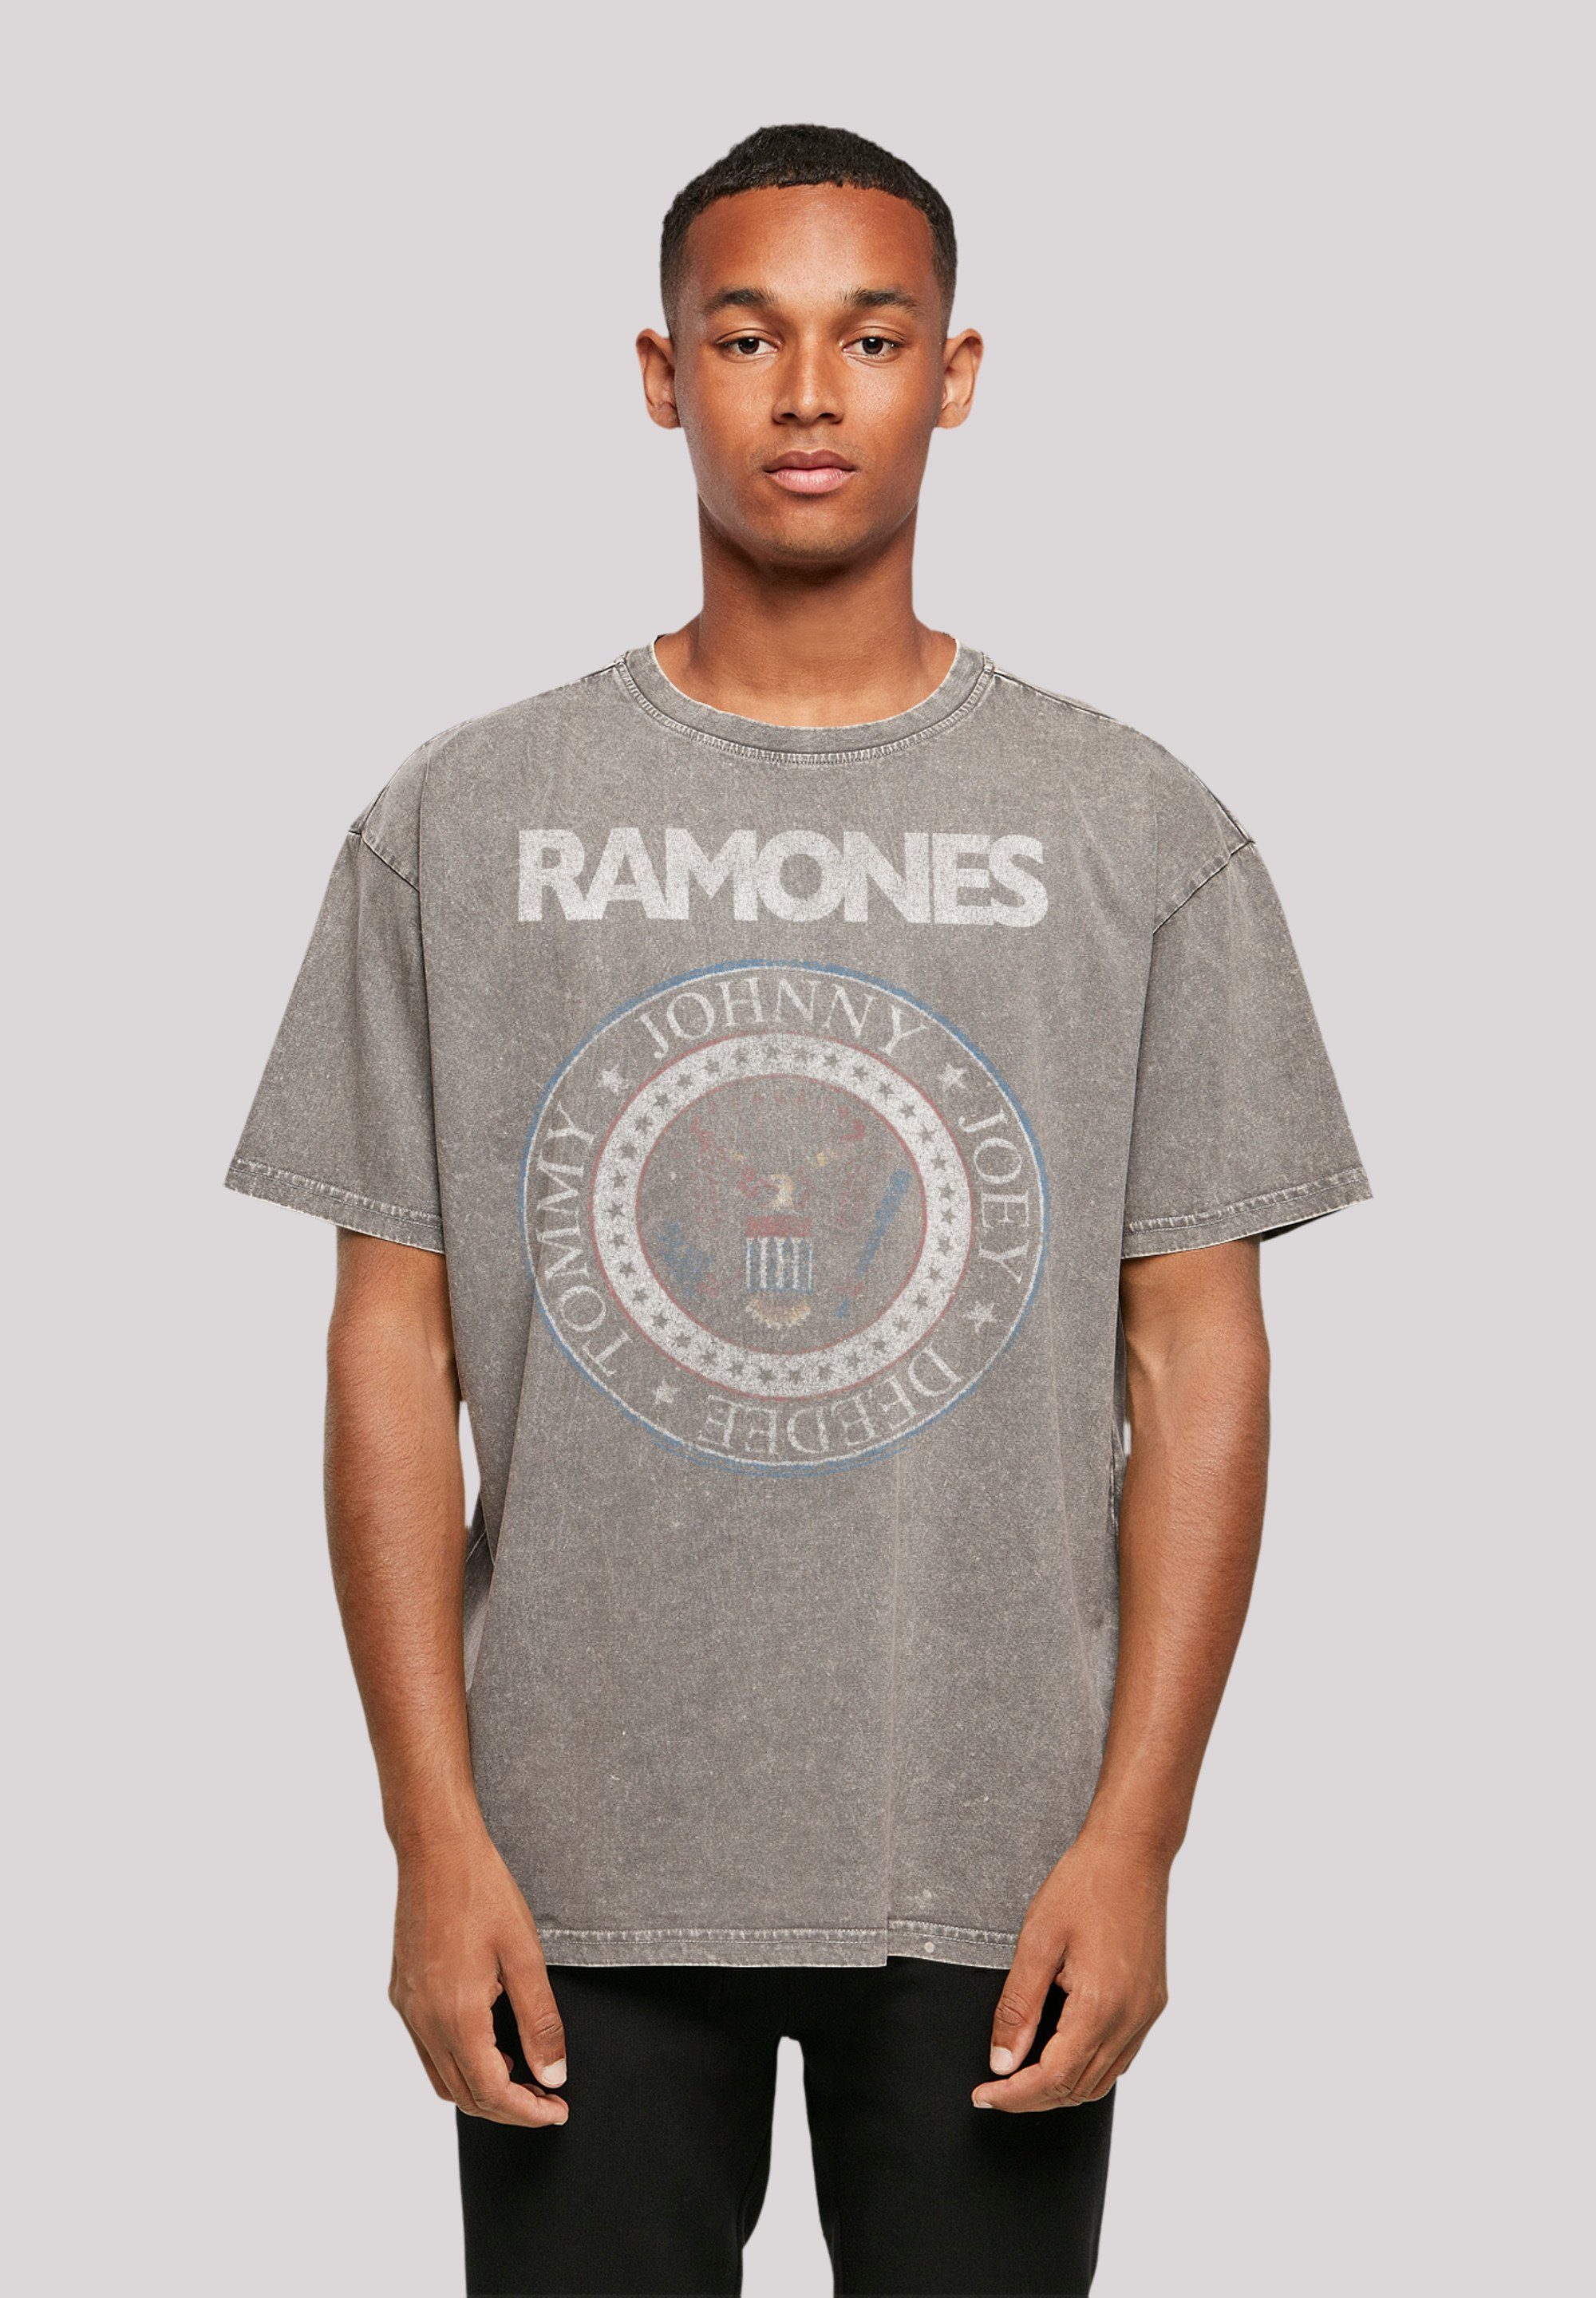 F4NT4STIC T-Shirt Ramones Rock Musik Band Red White And Seal Premium Qualität, Band, Rock-Musik Asphalt